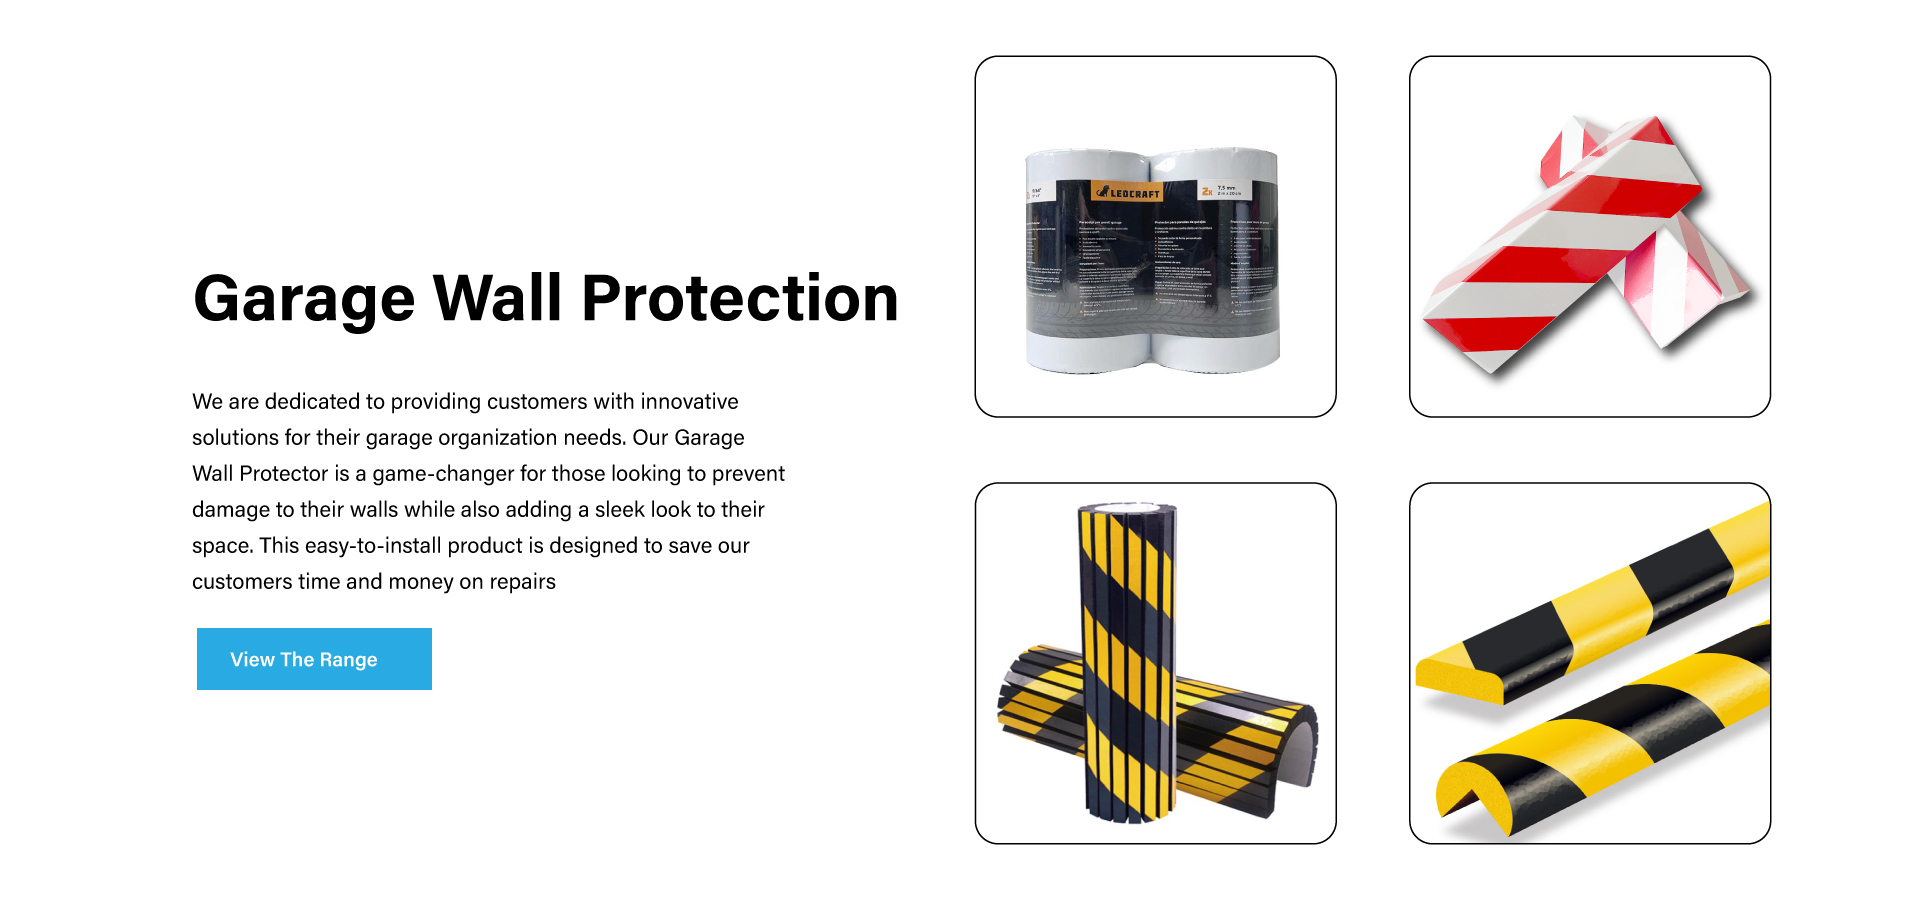 Garage wall protection